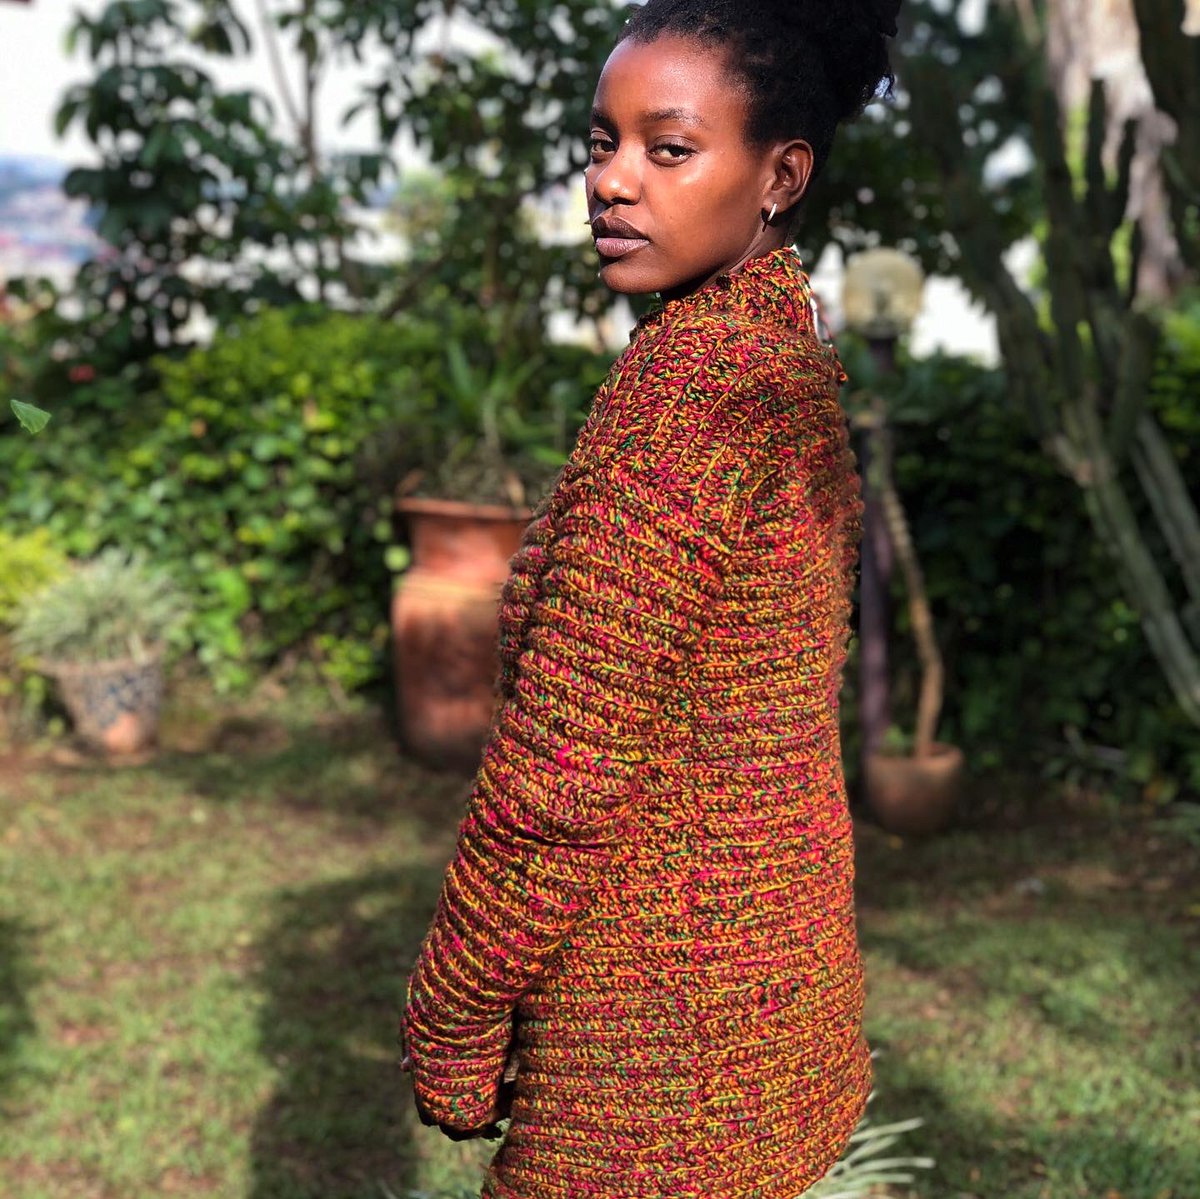 🎄HAPPY FESTIVE SEASON 🎄 

15% off pullover/sweater/hoodie
Until 24th December 2021

#wasebysarahuwase #madeinrwanda #wase #handmade #crochet #crochetlove #crochetinrwanda #christmasoffer